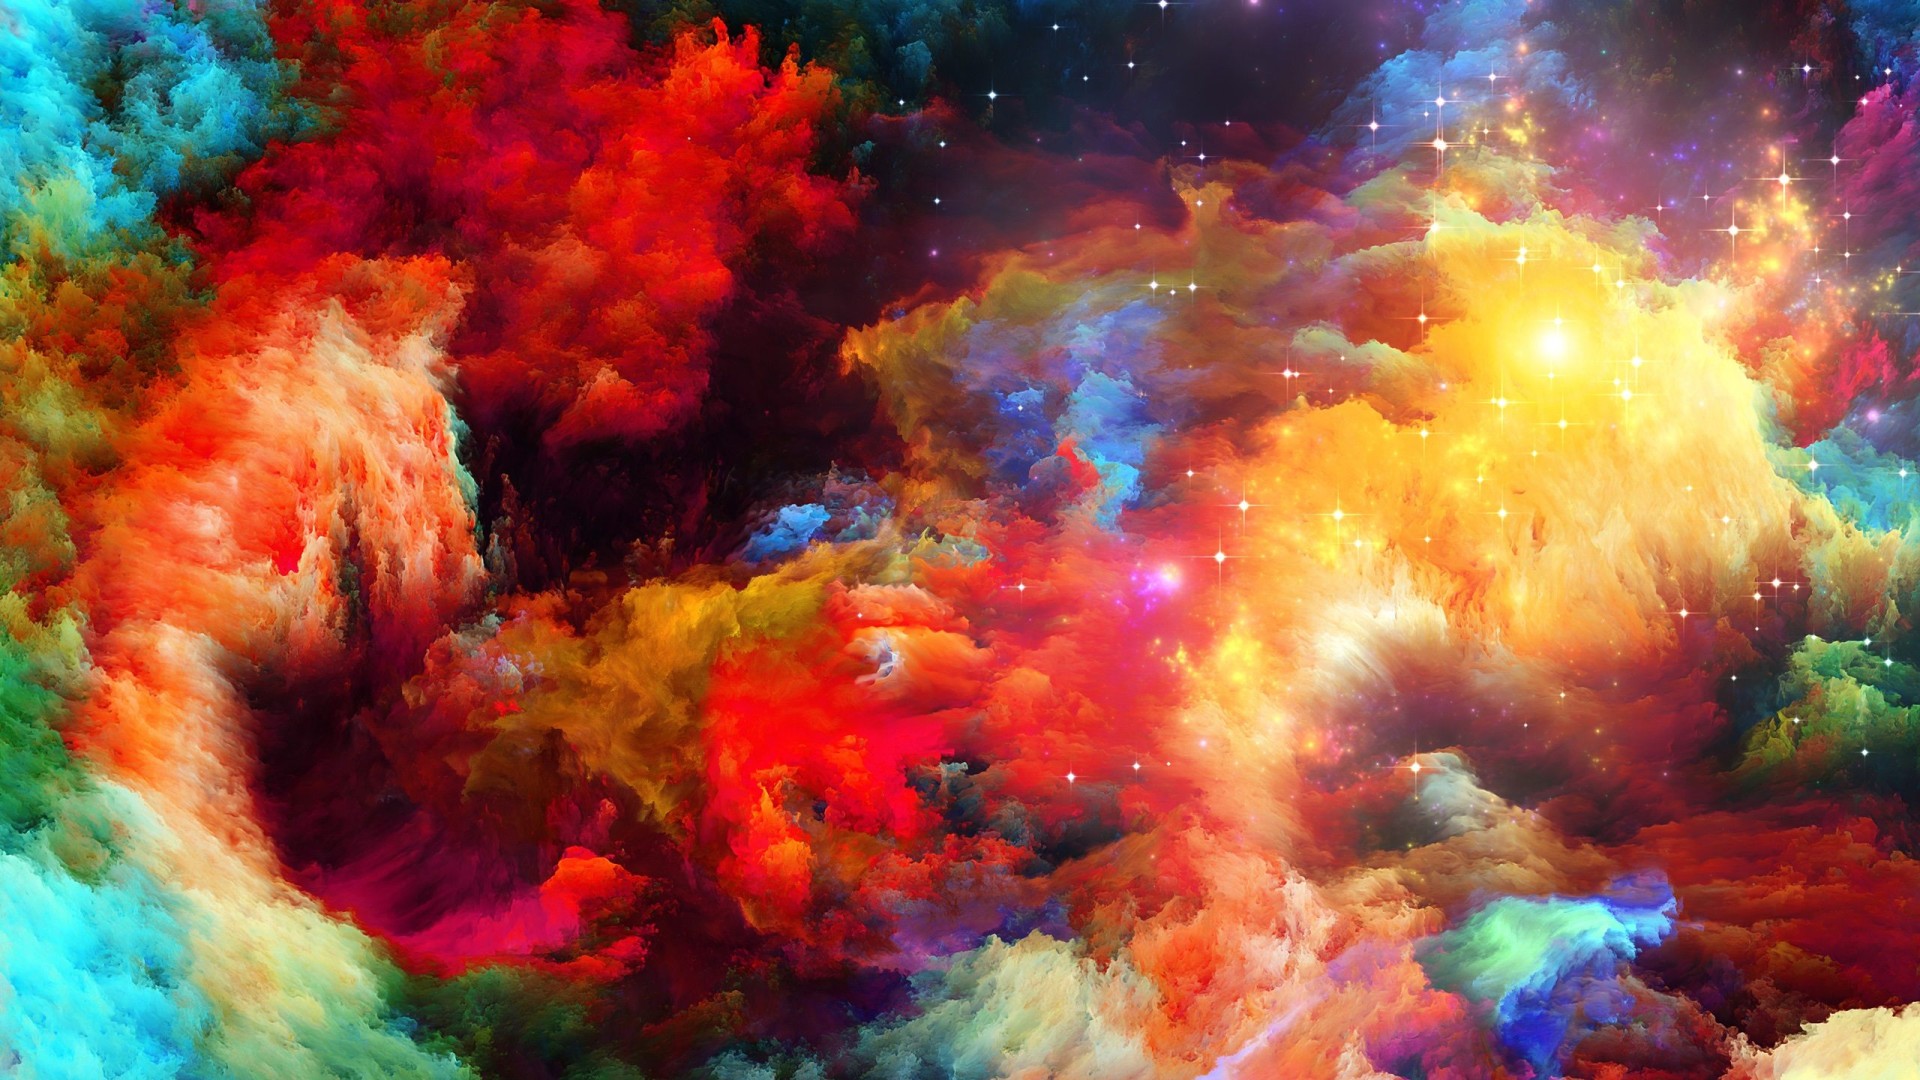 cosmos, color explosion, nebula, paint, bubbling sky, beautiful wallpaper, космос, цветной взрыв, туманность, краски, бурлящее небо, красивые обои, ब्रह्मांड, रंग विस्फोट, नेबुला, पेंट, बुलबुला आकाश, सुंदर वॉलपेपर